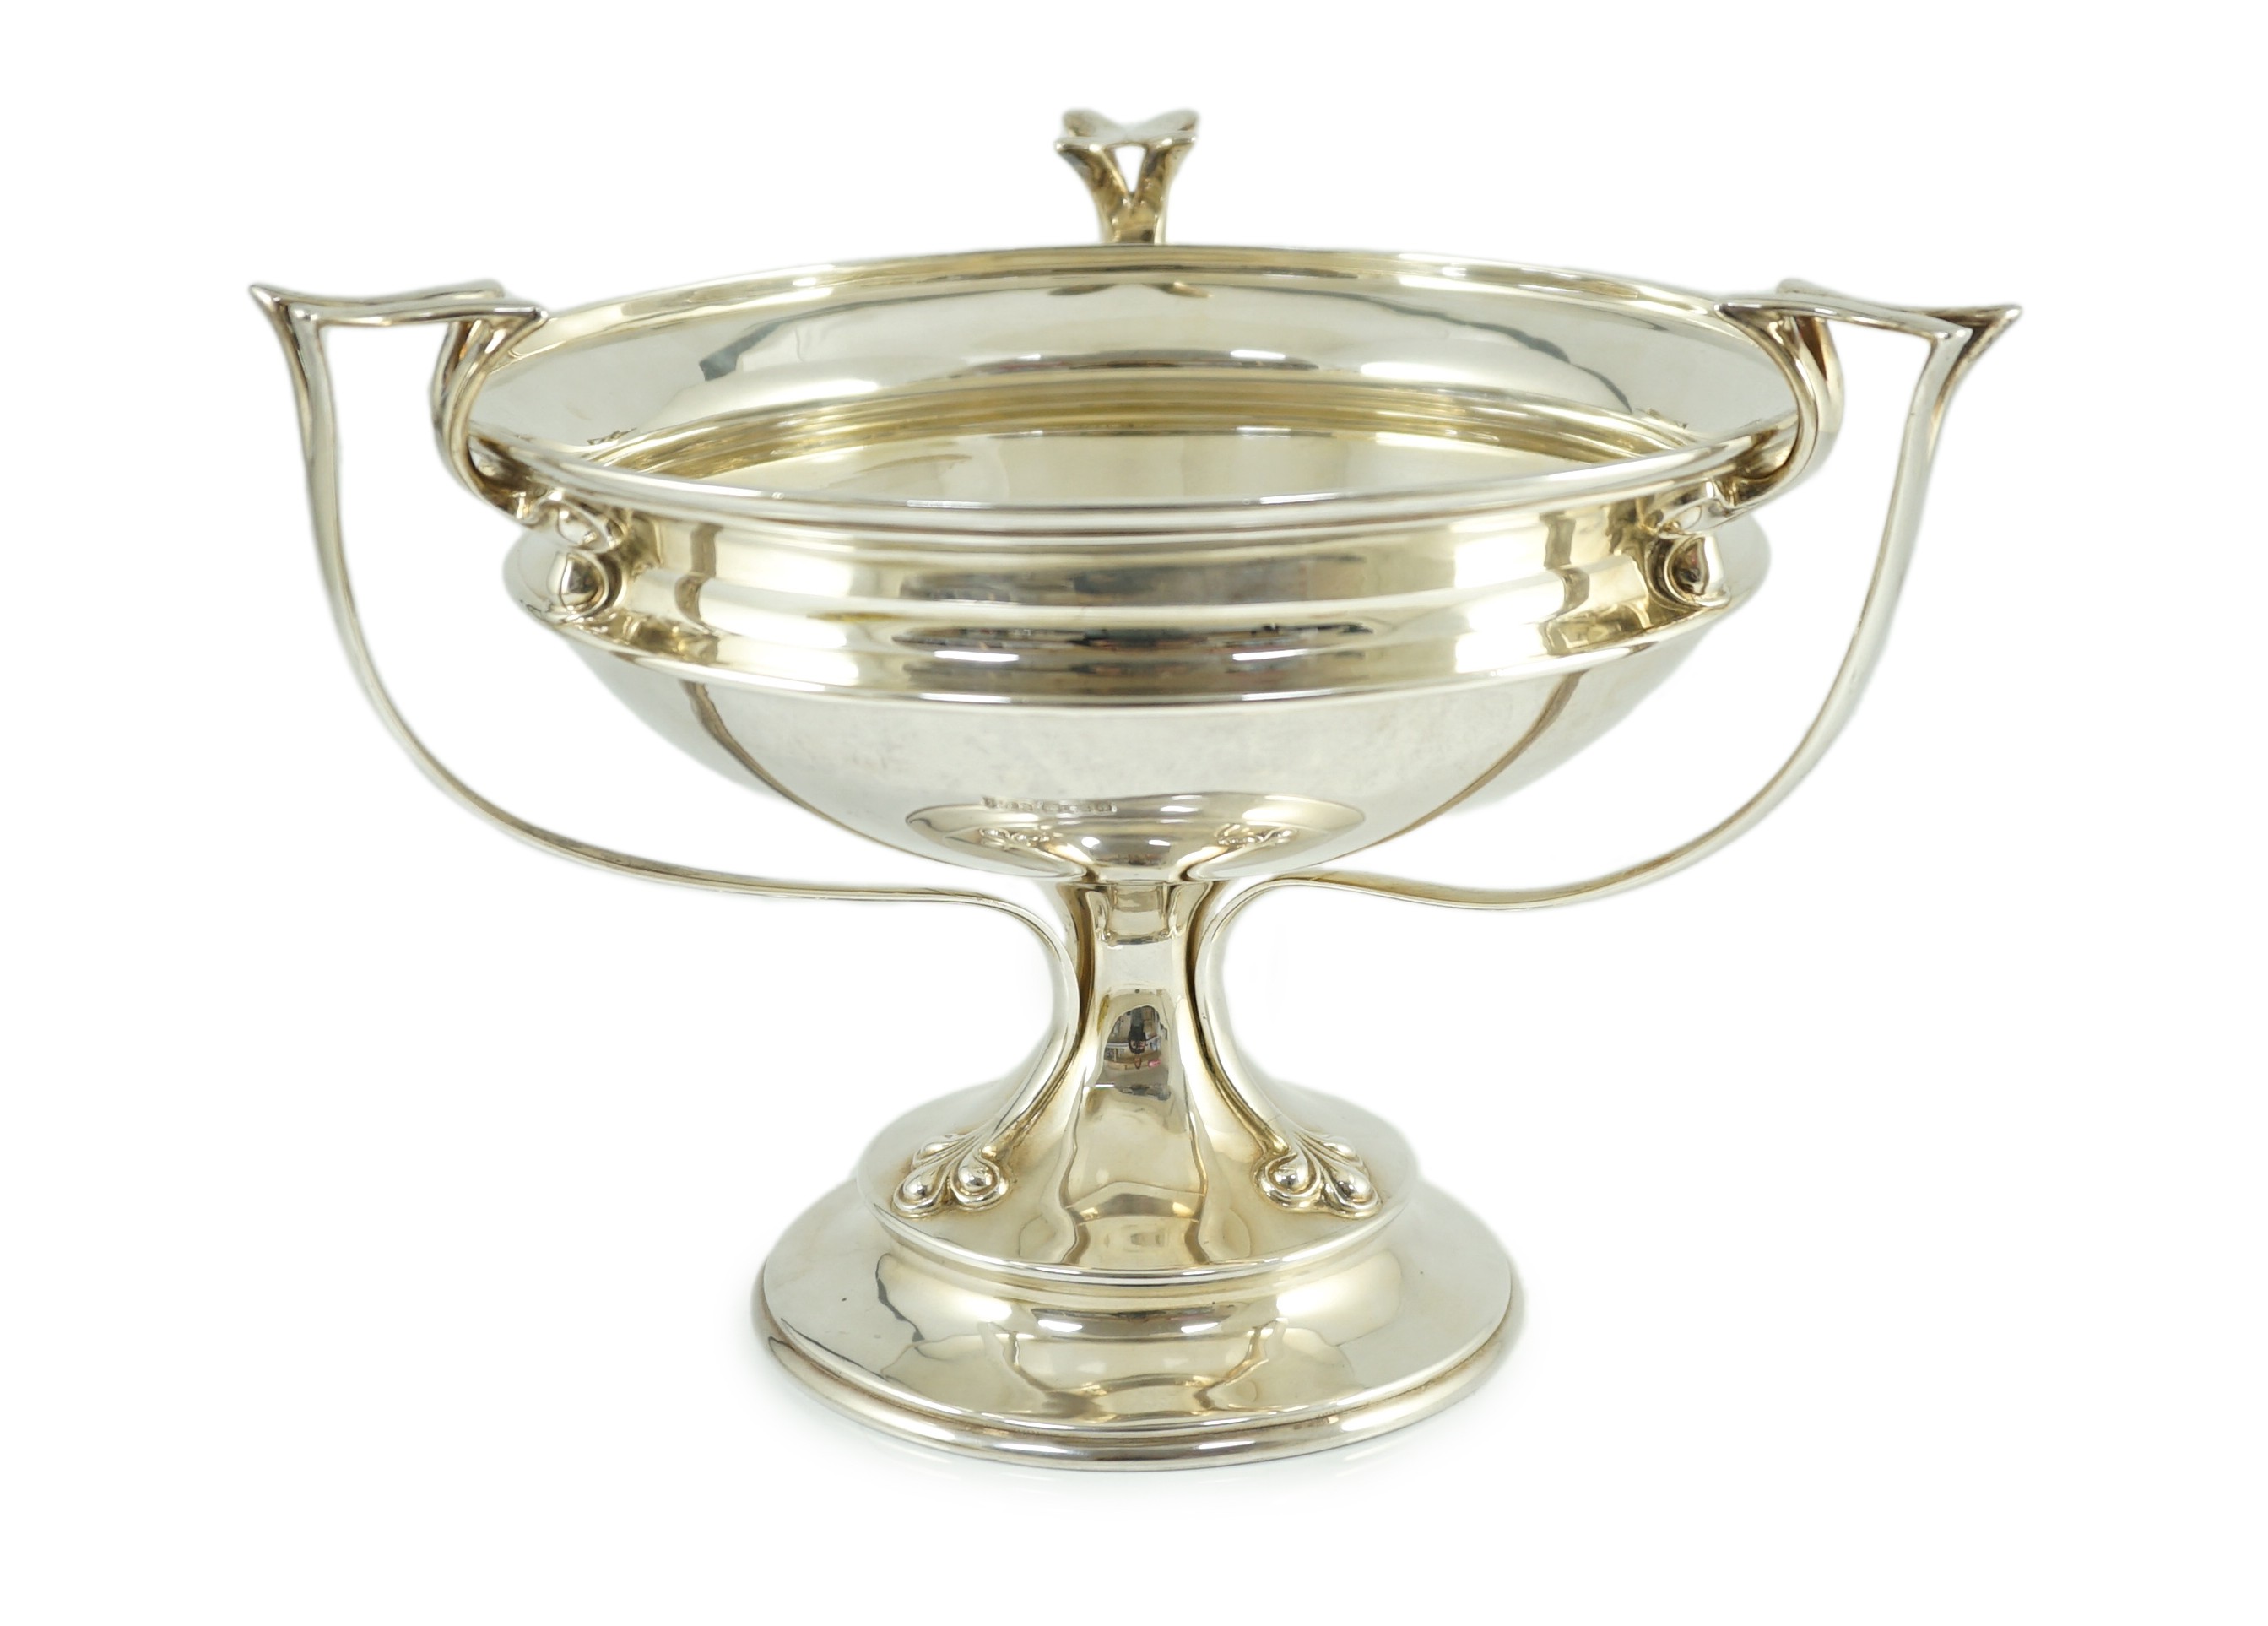 An Edwardian Art Nouveau silver tri-handled pedestal fruit bowl, by Joseph Rodgers & Sons, with